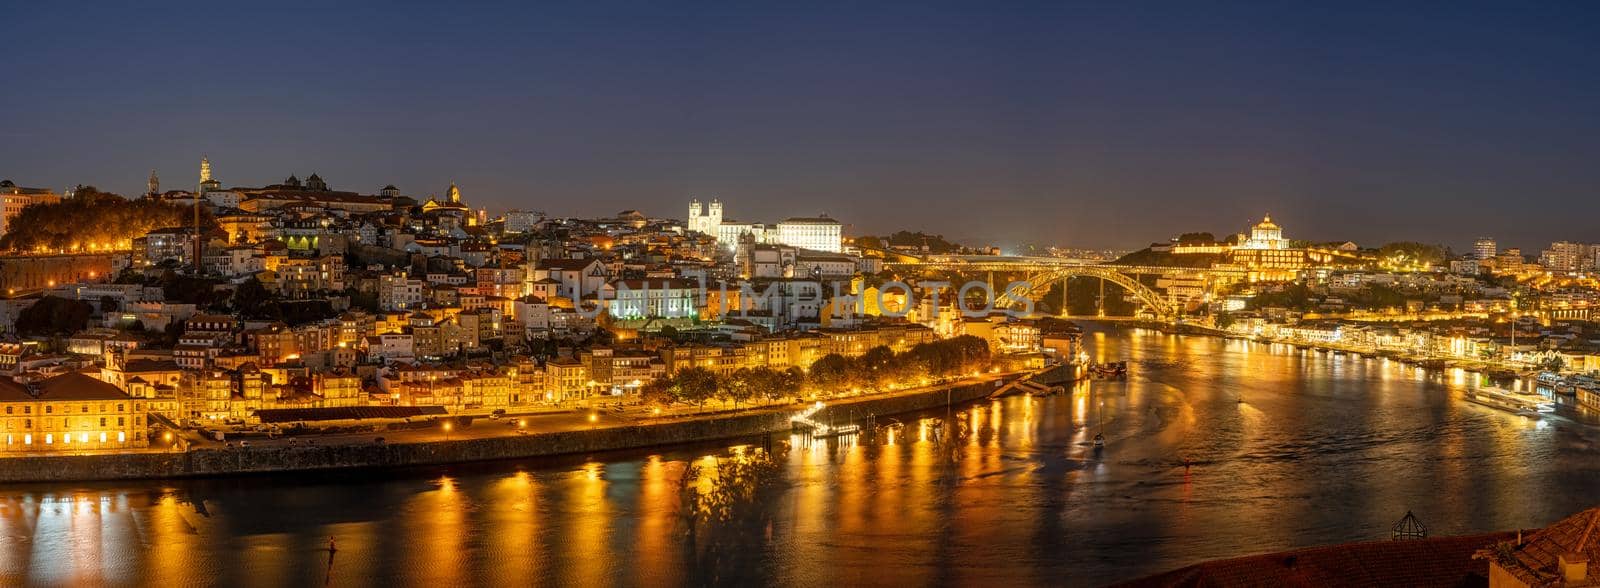 Panorama of Porto at night by elxeneize